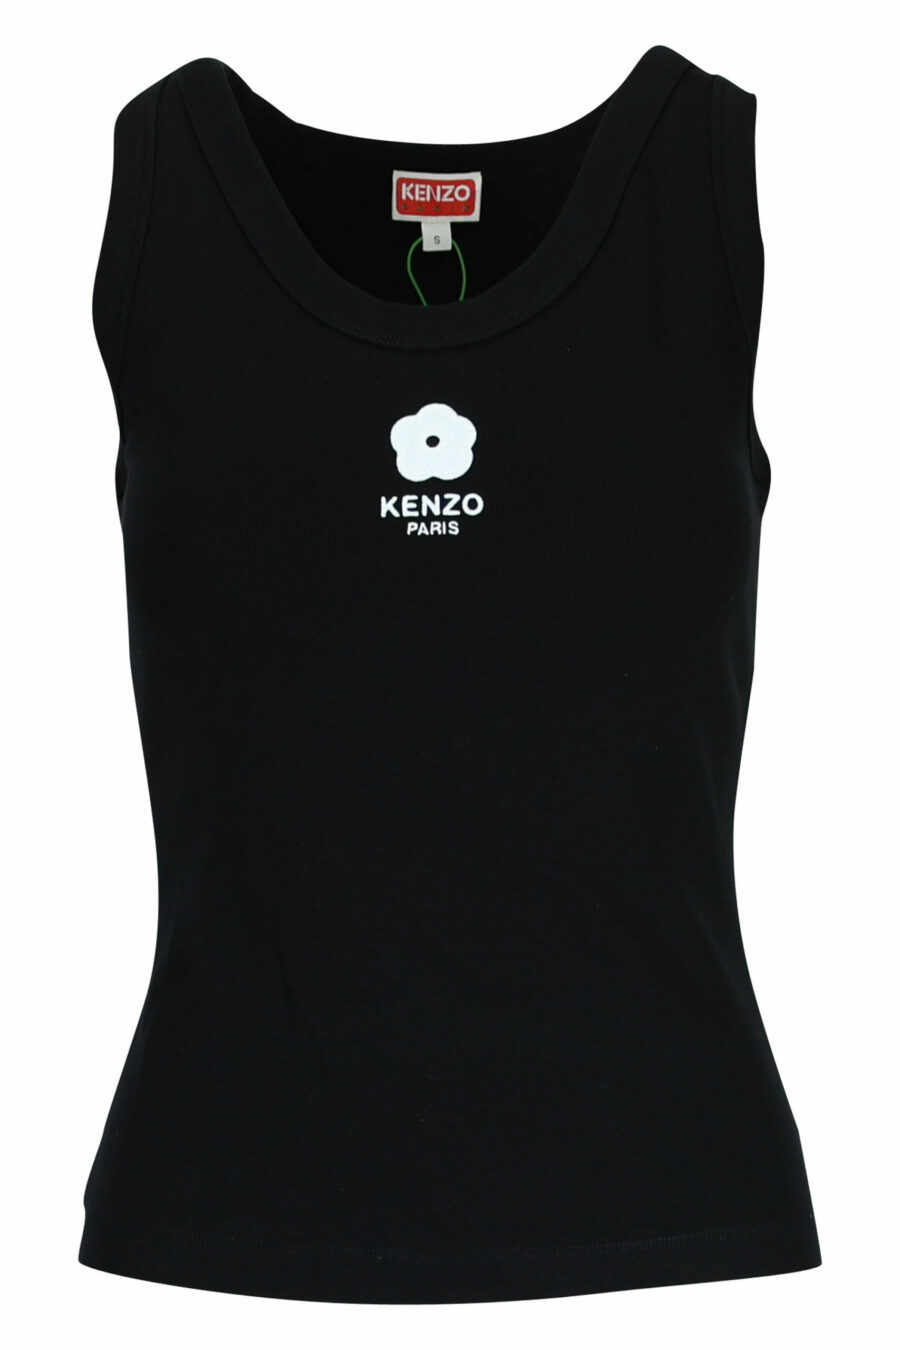 Camiseta negra sin mangas con logo "boke flower" blanco - 3612230586635 scaled